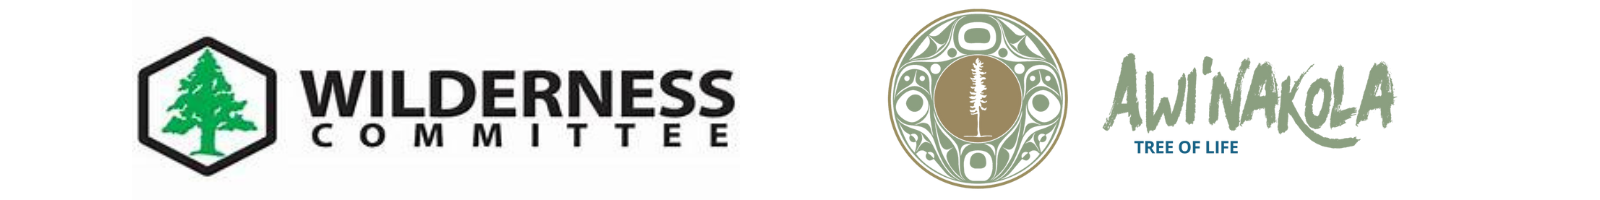 Wilderness Committee and Awi'nakola logos